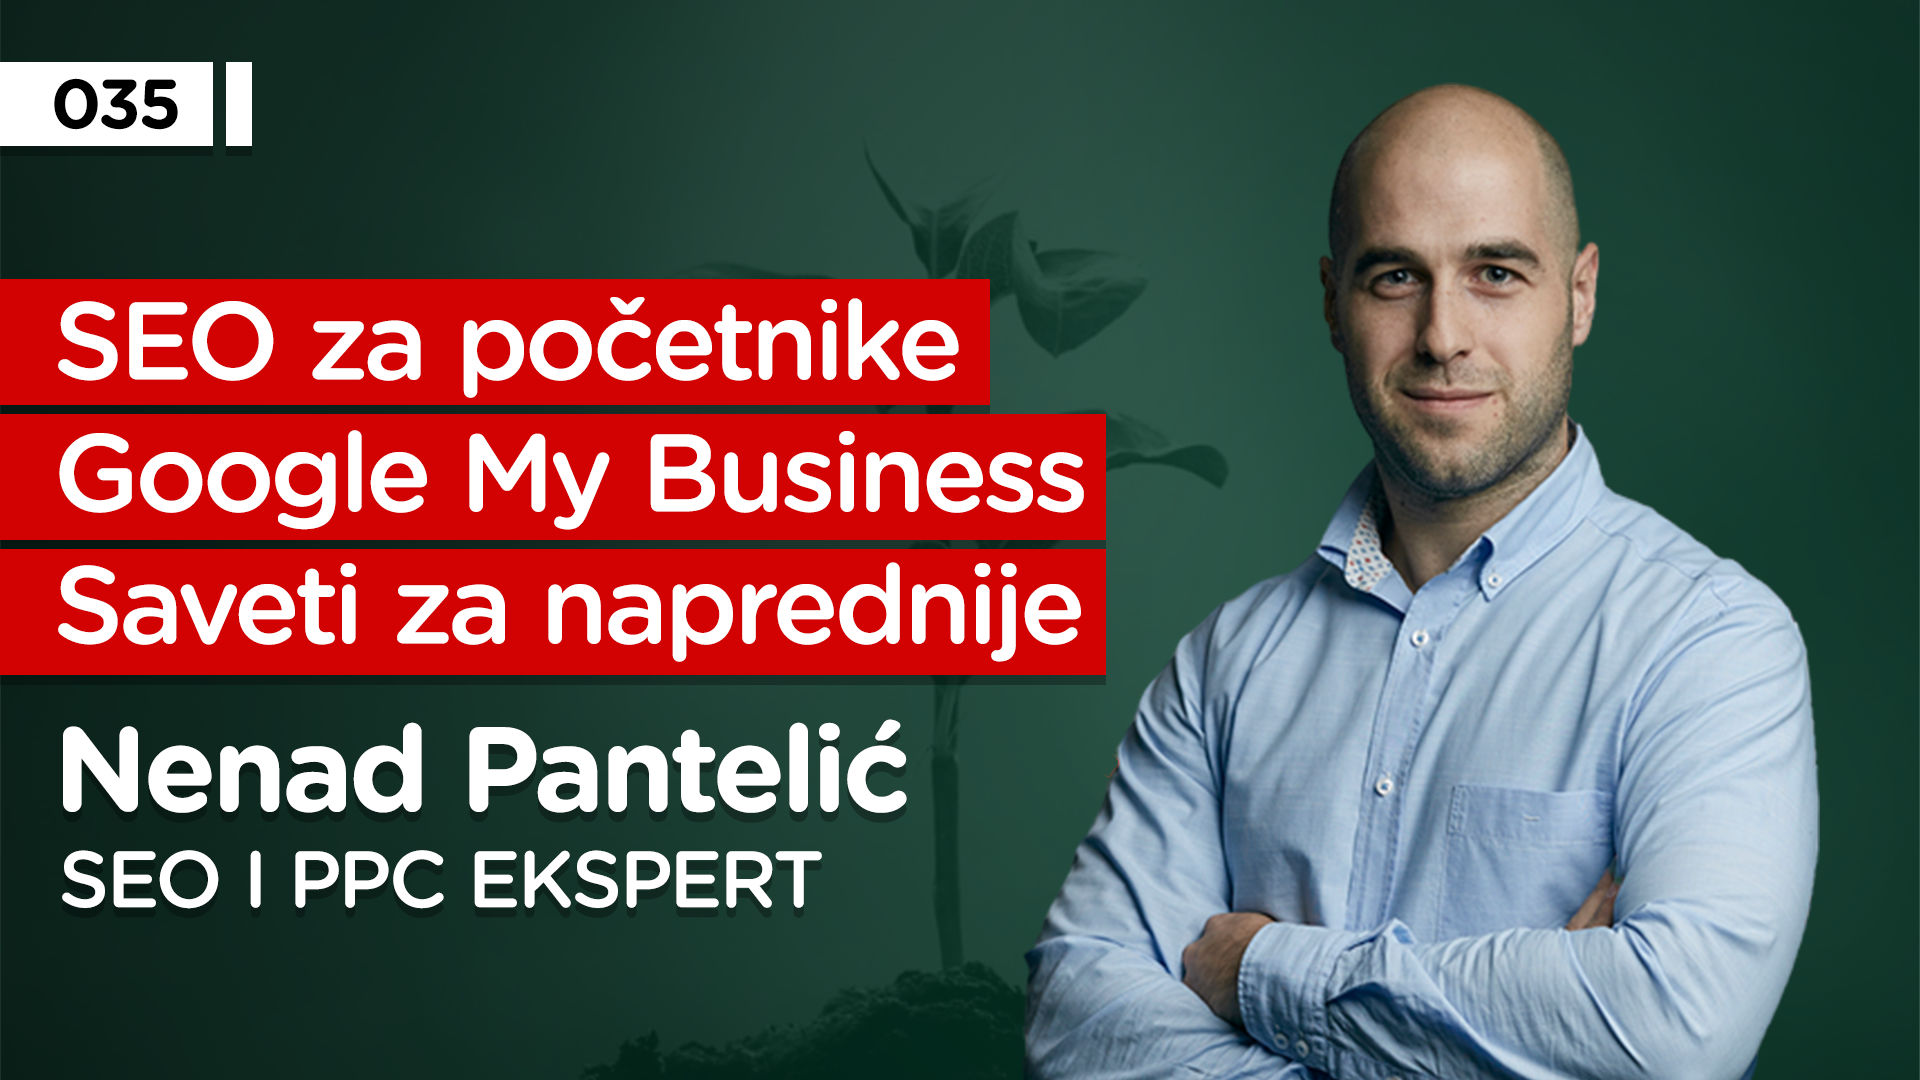 EP035: Nenad Pantelić